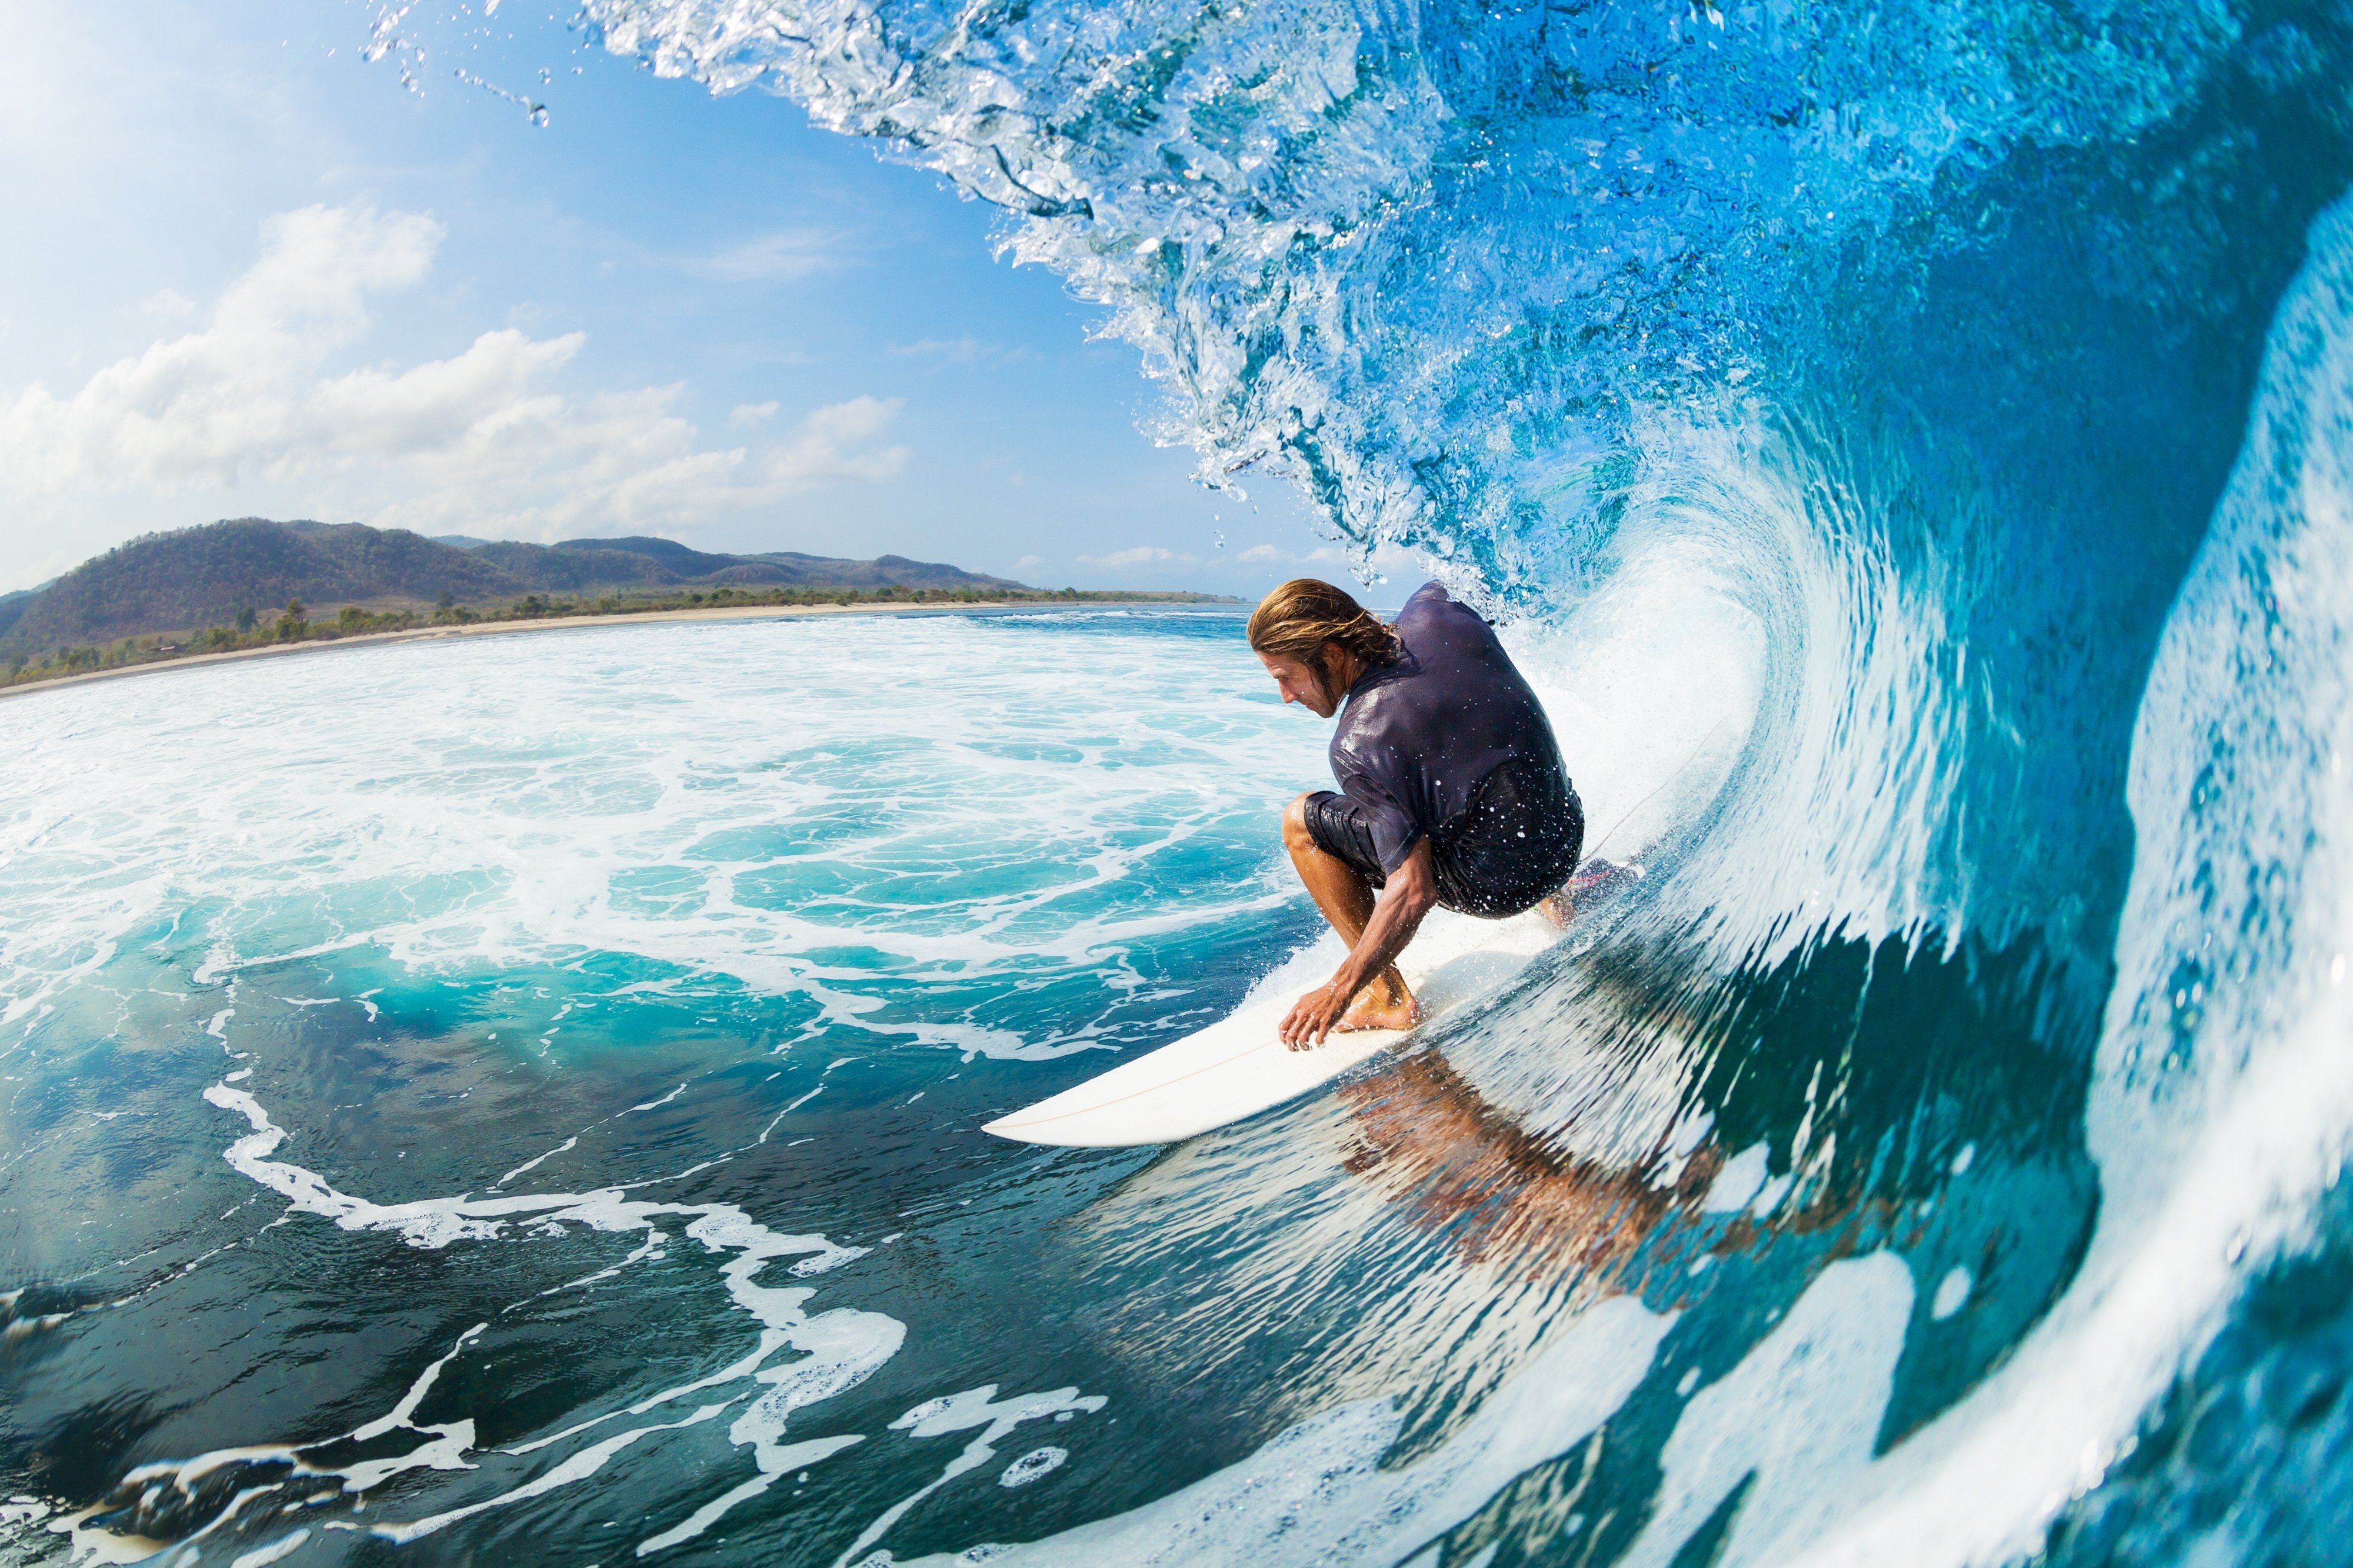 Surfing Image Wallpaper